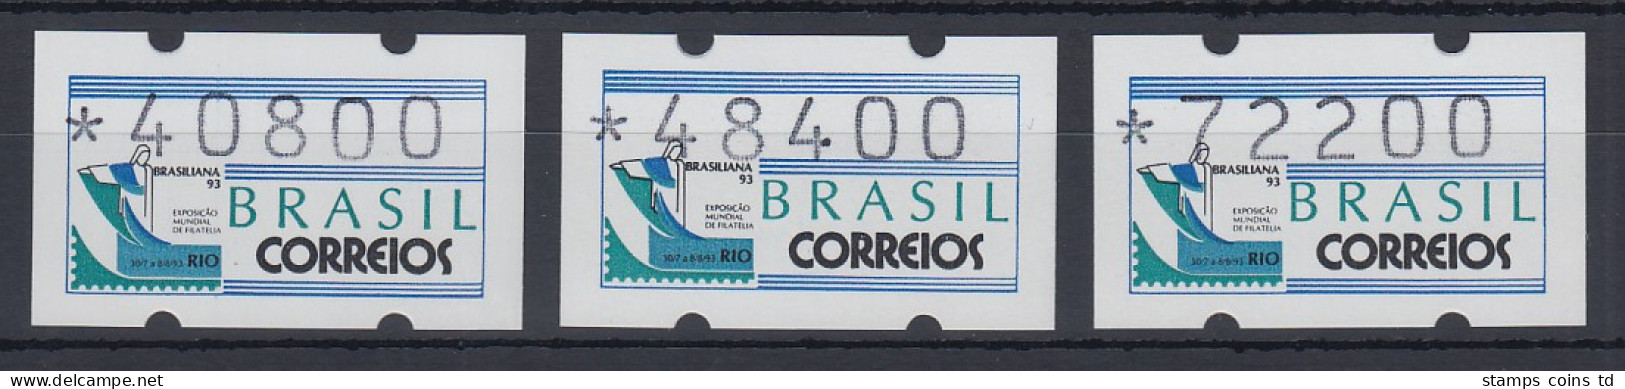 Brasilien Klüssendorf-ATM 1993 BRASILIANA Mi-Nr 5 Satz 40800 - 48400 - 72200 ** - Viñetas De Franqueo (Frama)